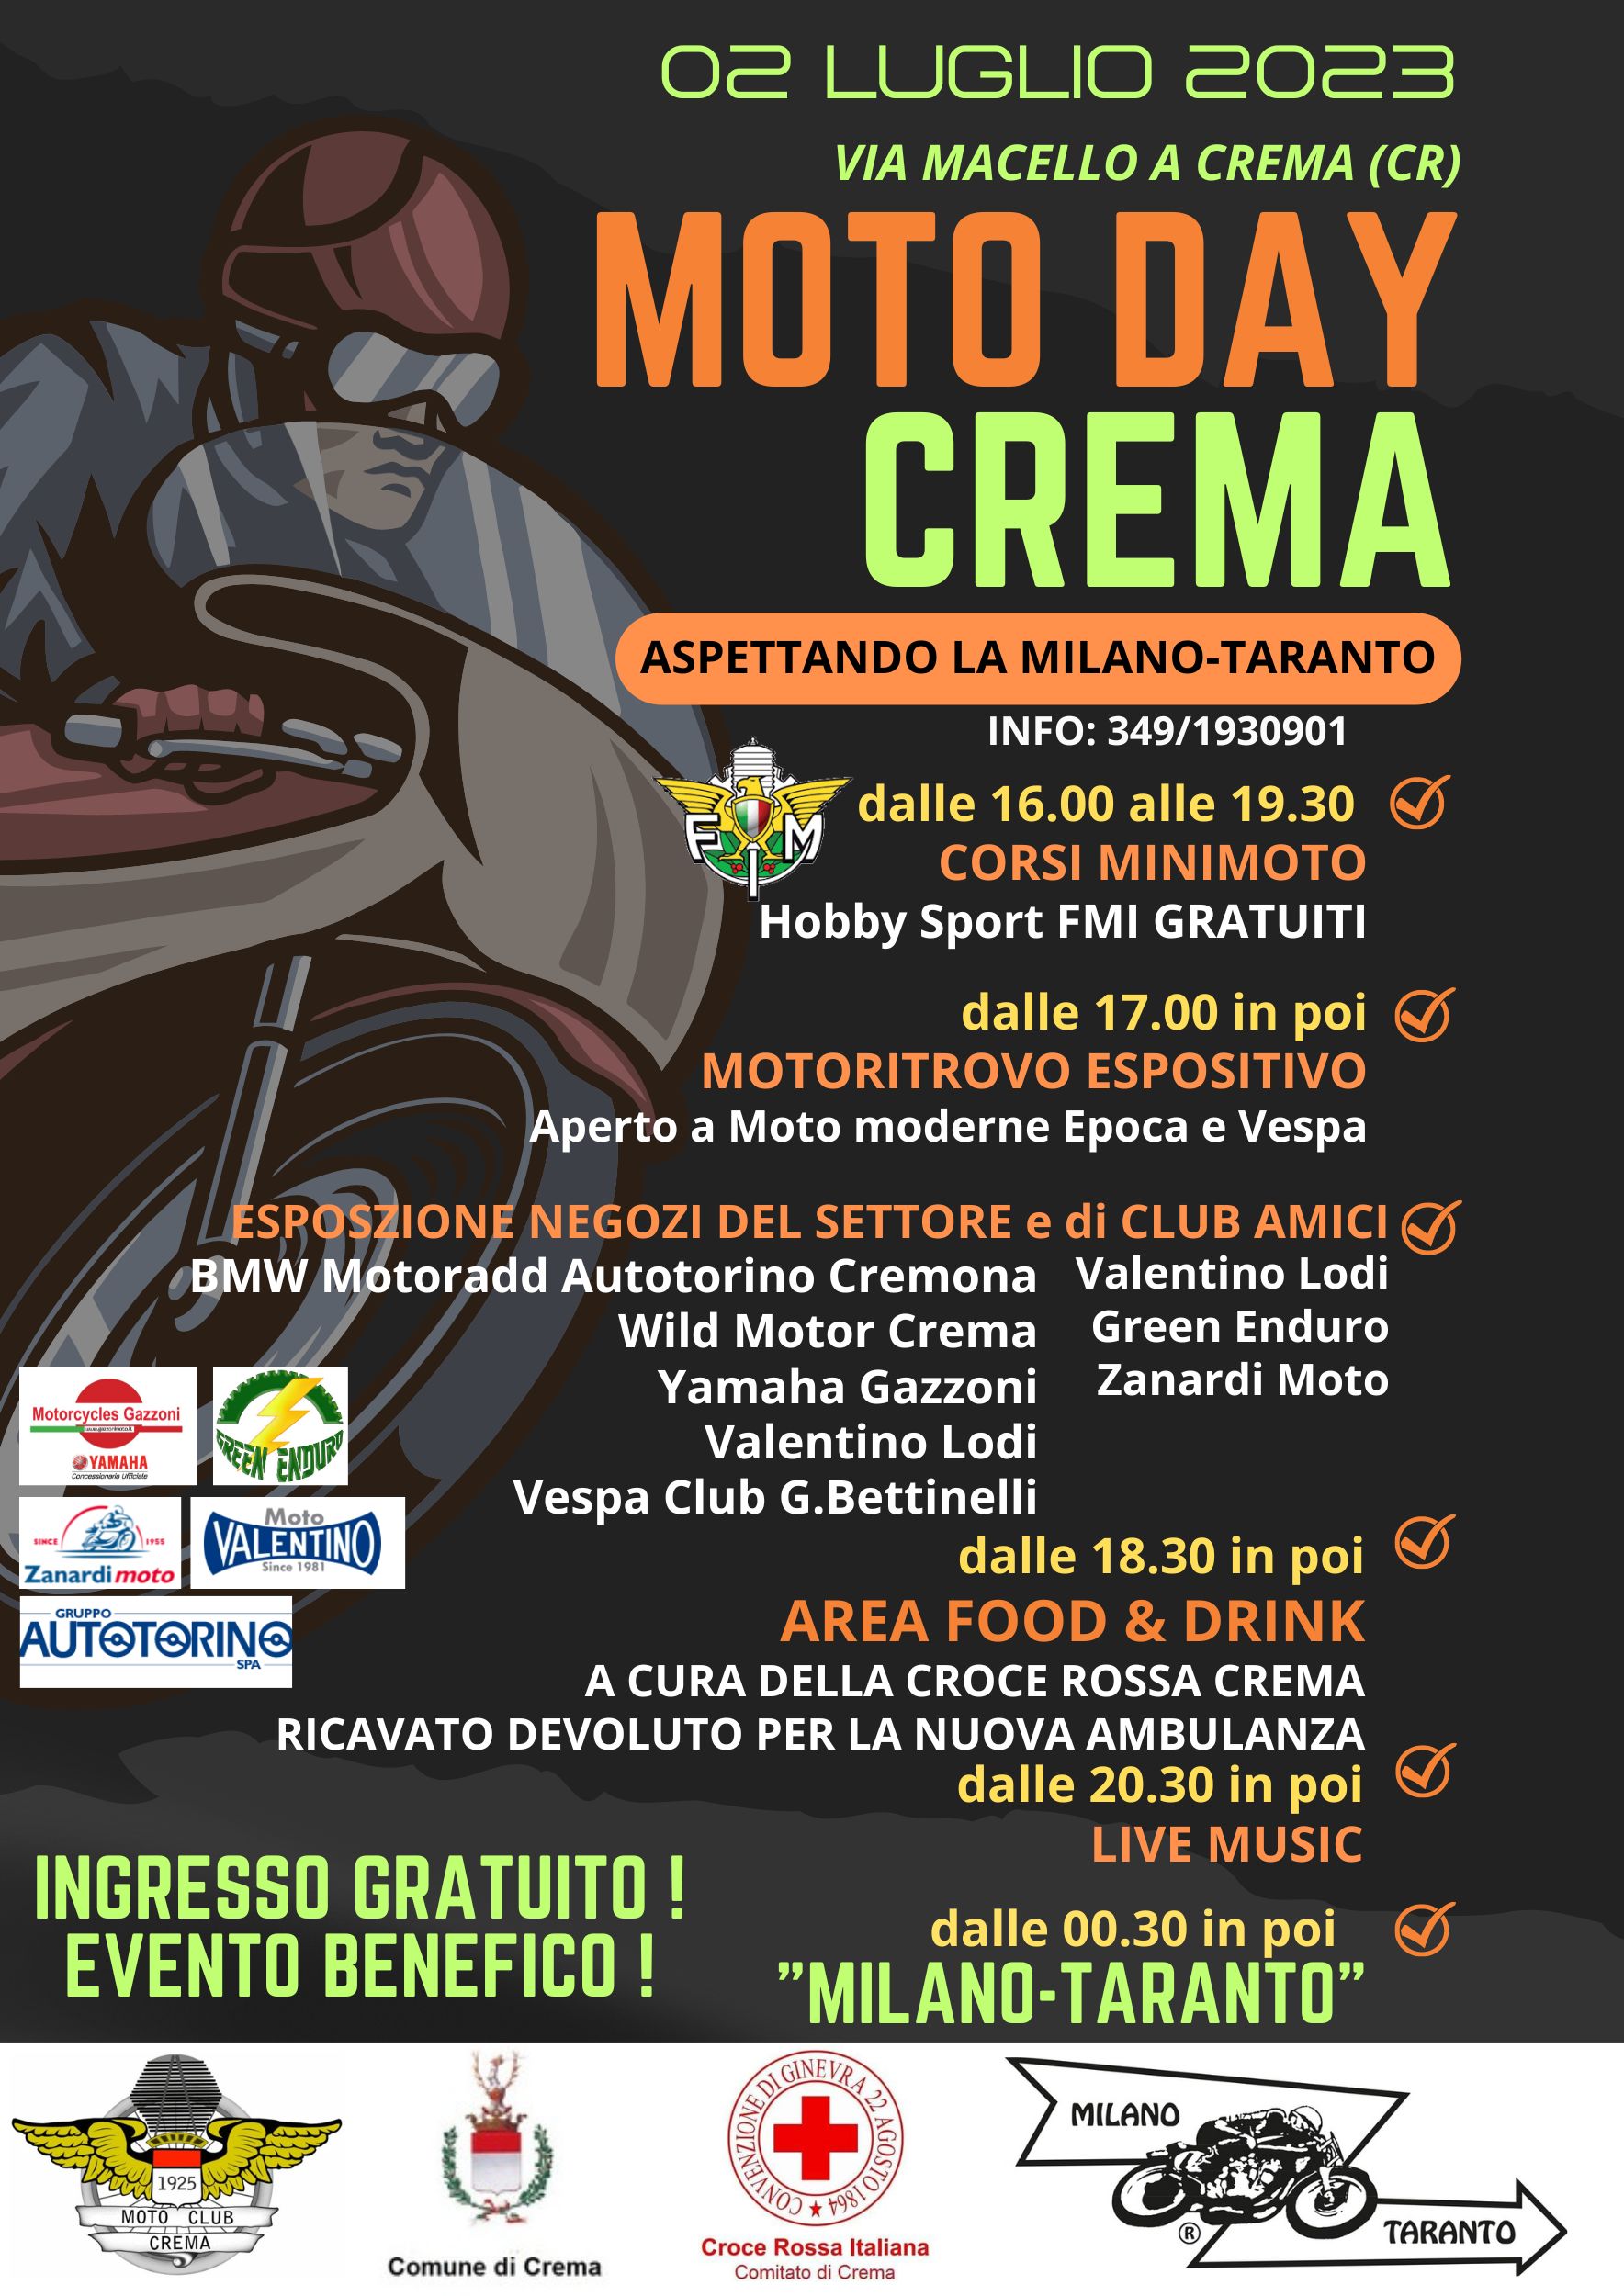 MotoDay Crema…aspettando la Milano Taranto